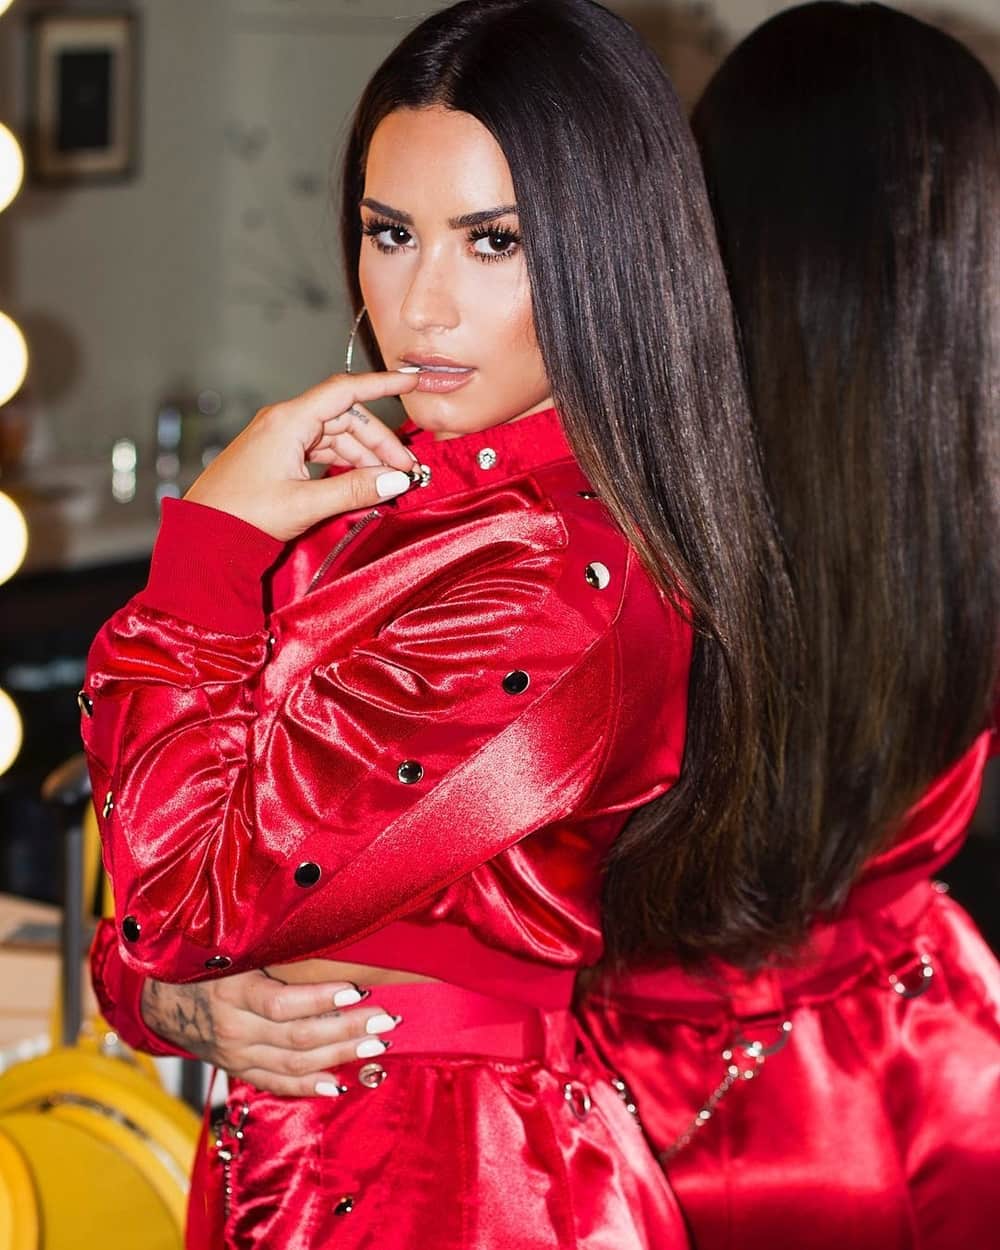 Sempat Diduga Overdosis, Demi Lovato Dikabarkan Stabil